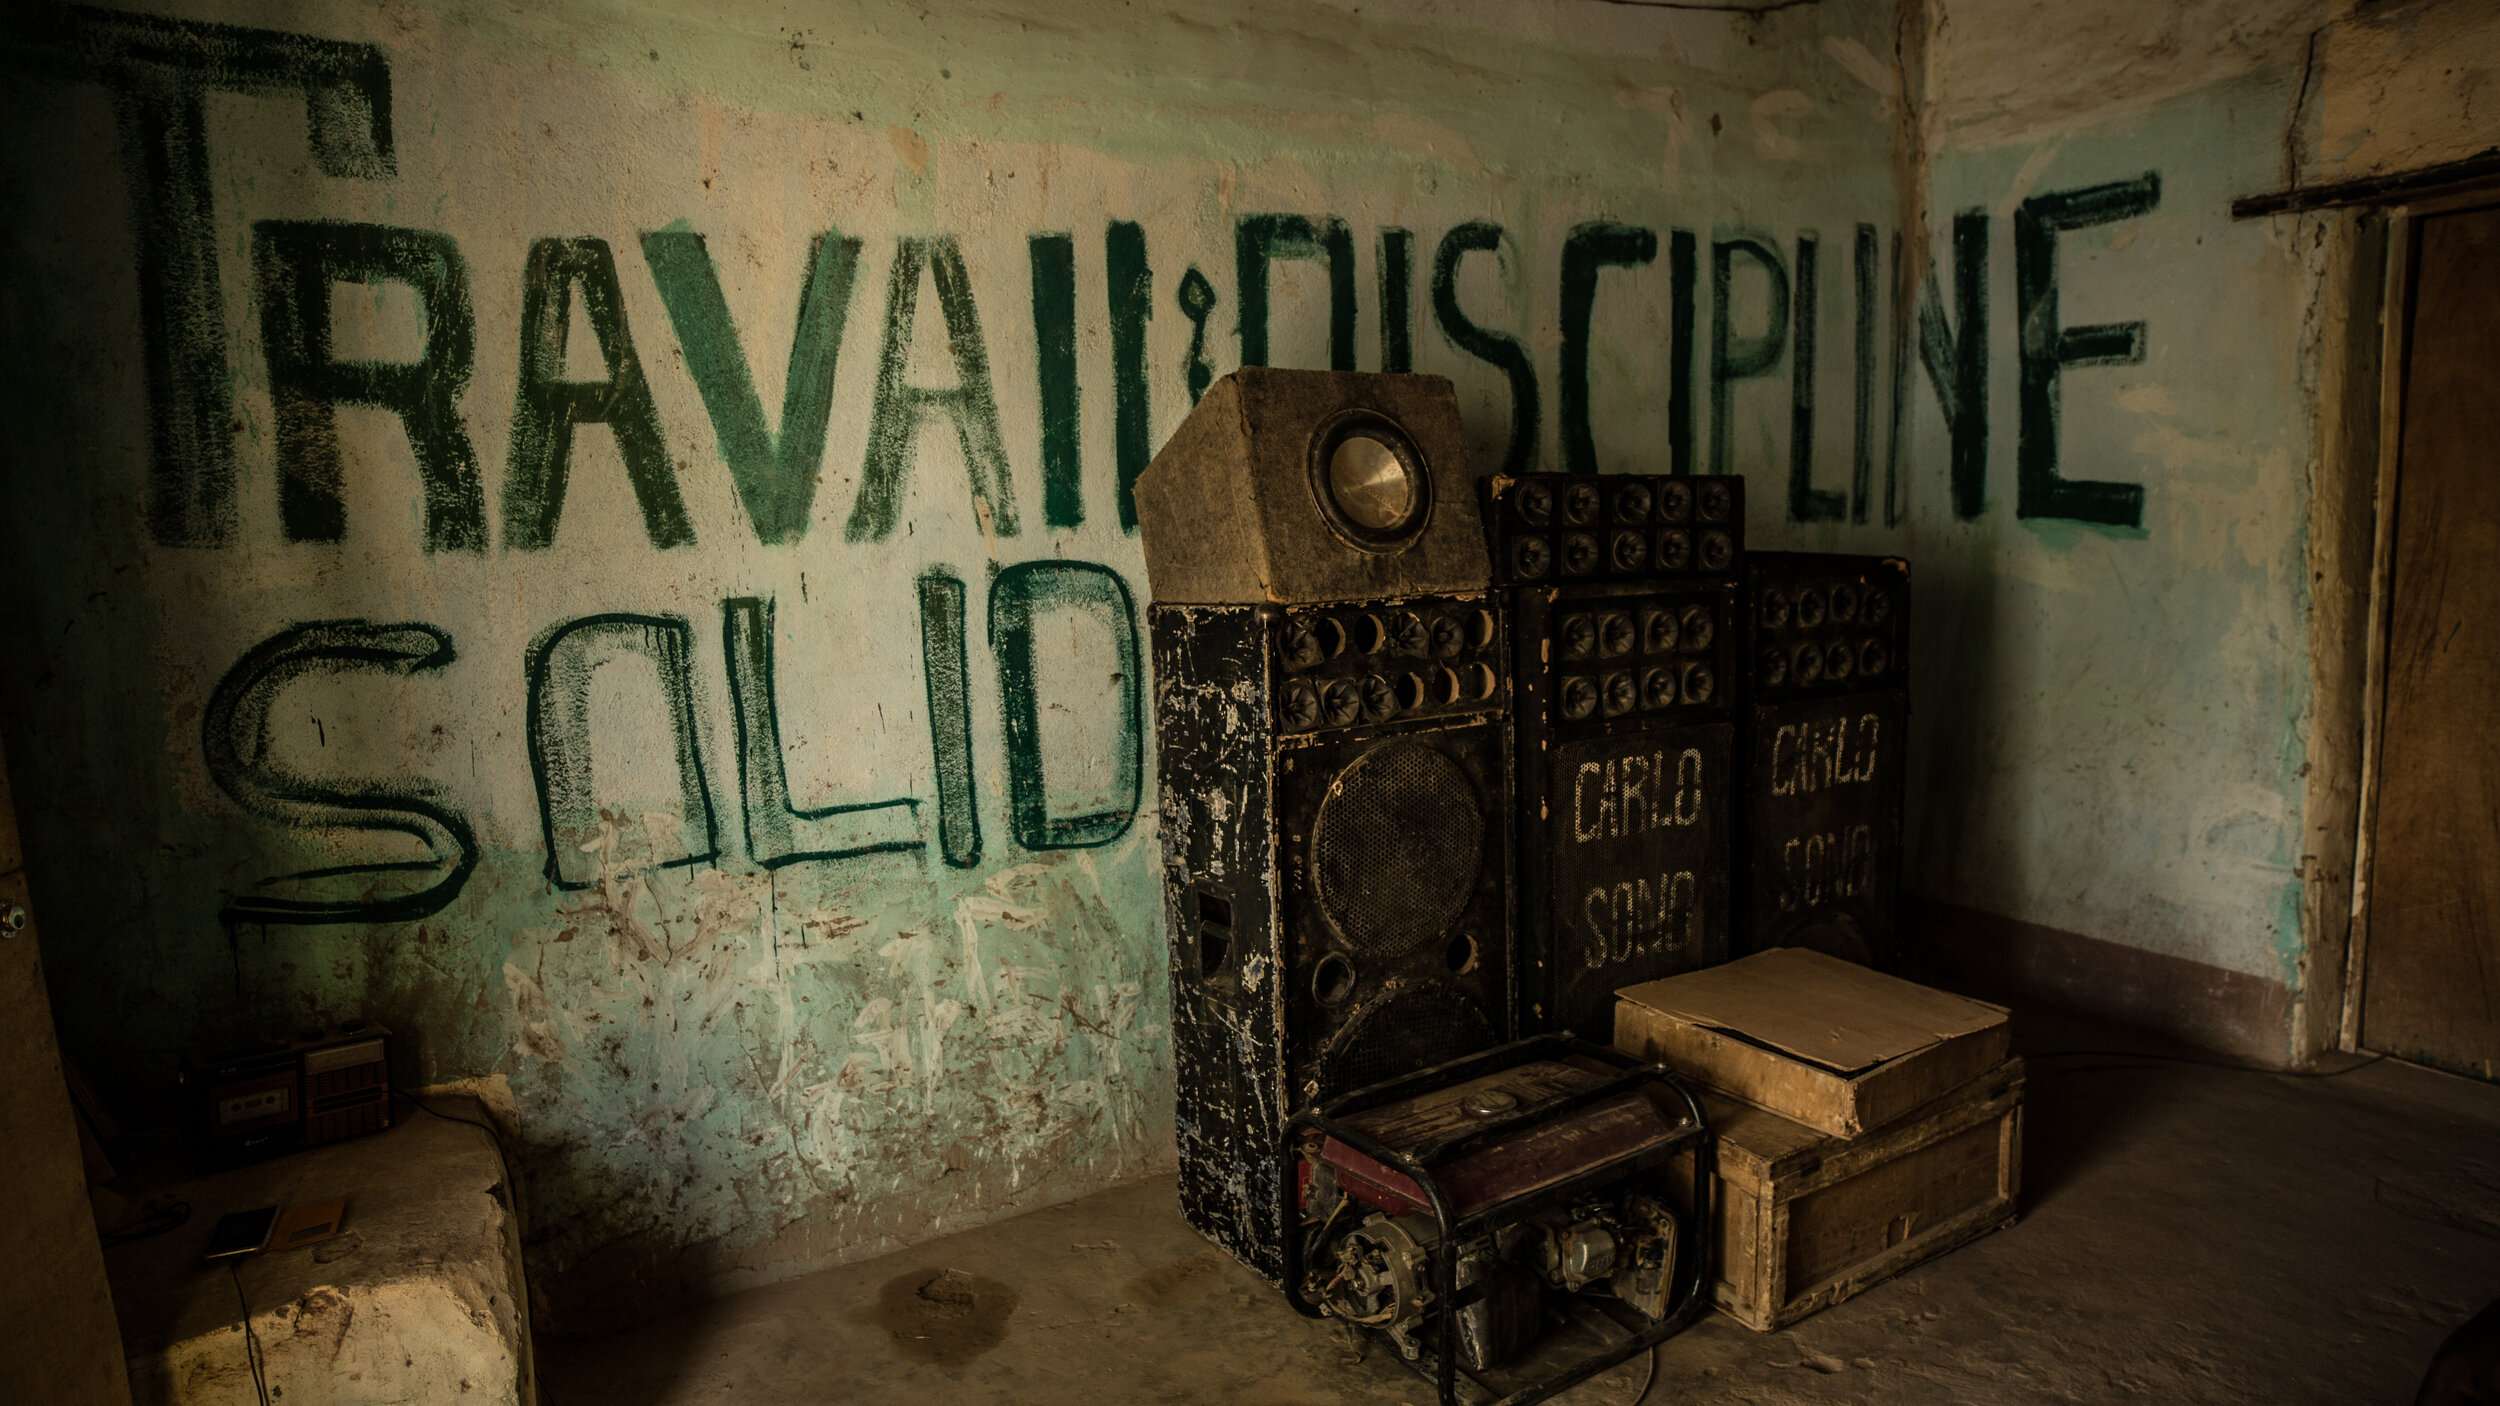  “Travail, Discipline, Solidarité” - Work, Discipline, Solidarity, at a radio station in Mopti, Mali, 2016 